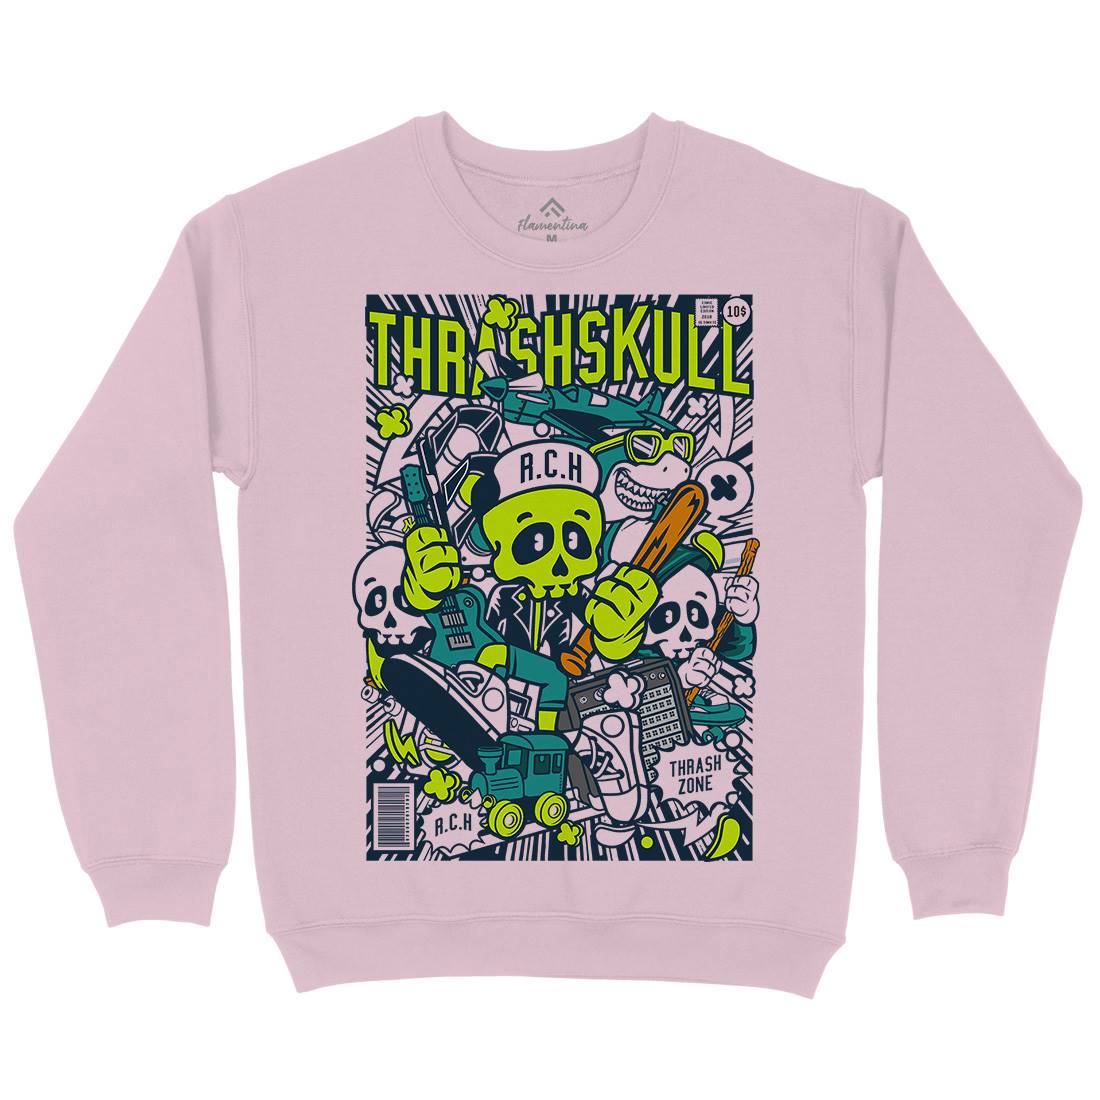 Thrash Skull Kids Crew Neck Sweatshirt Music C276